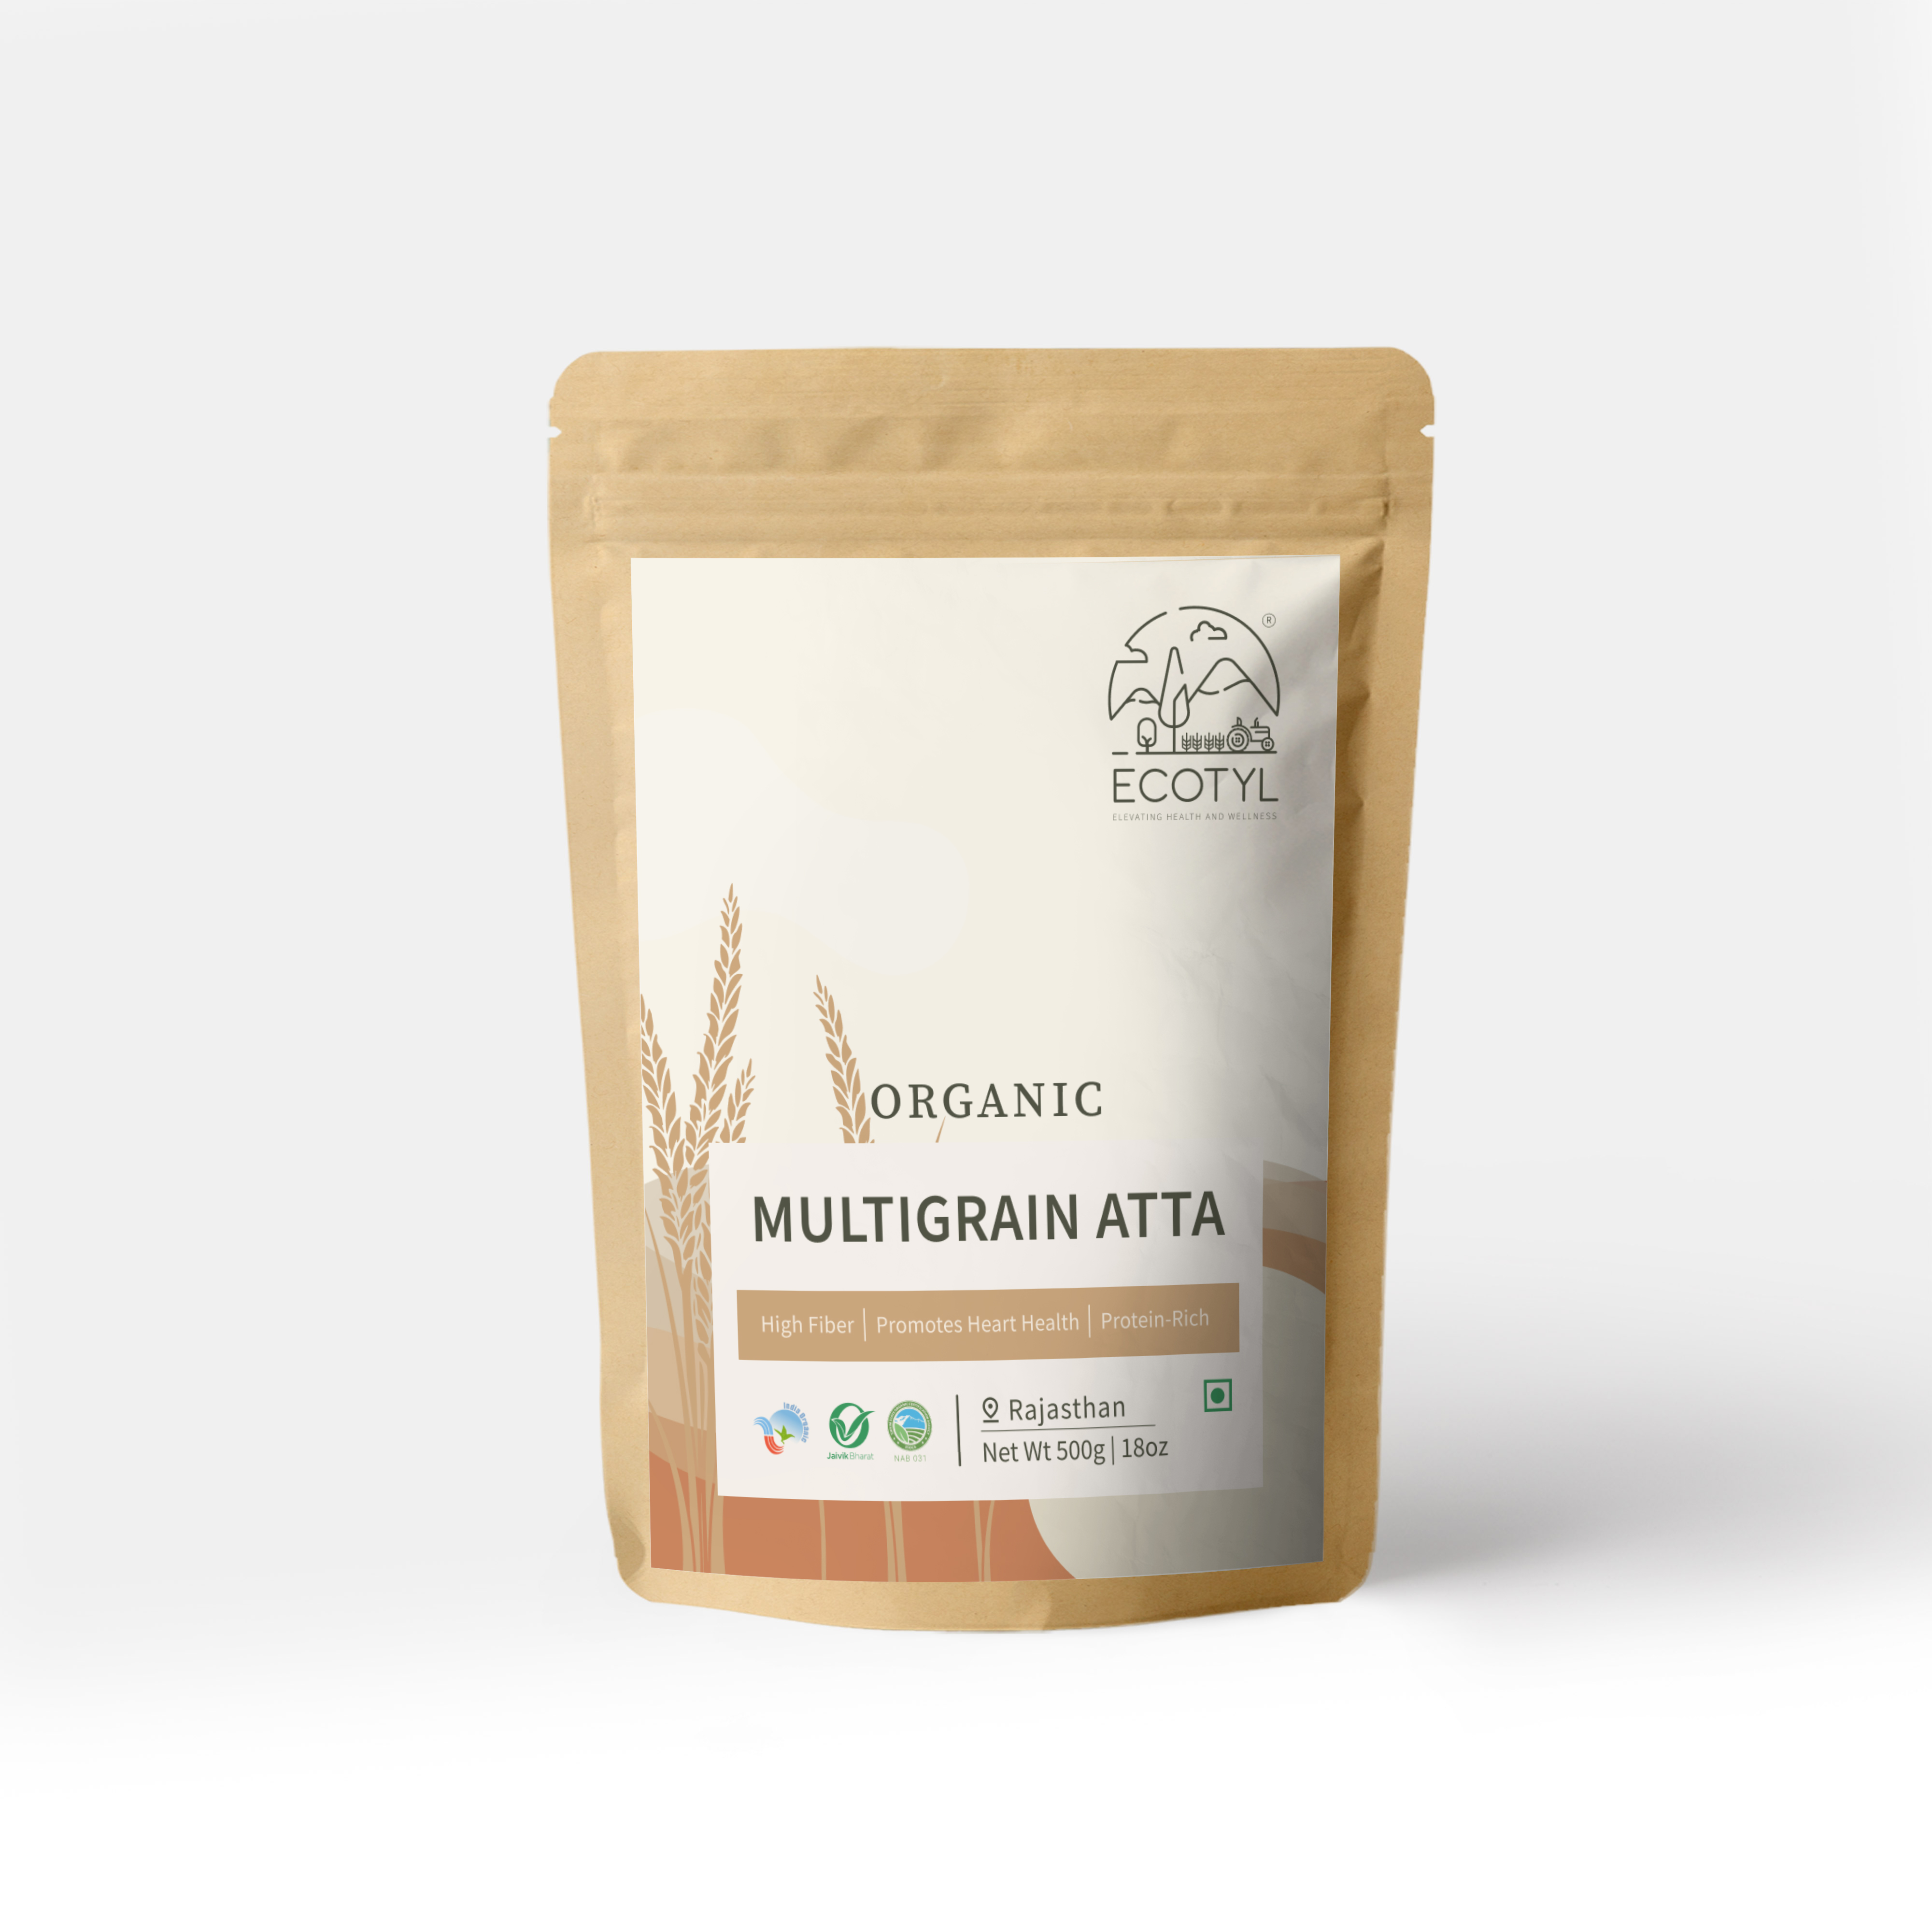 Buy Ecotyl Organic Multigrain Atta - 500 g at Best Price Online